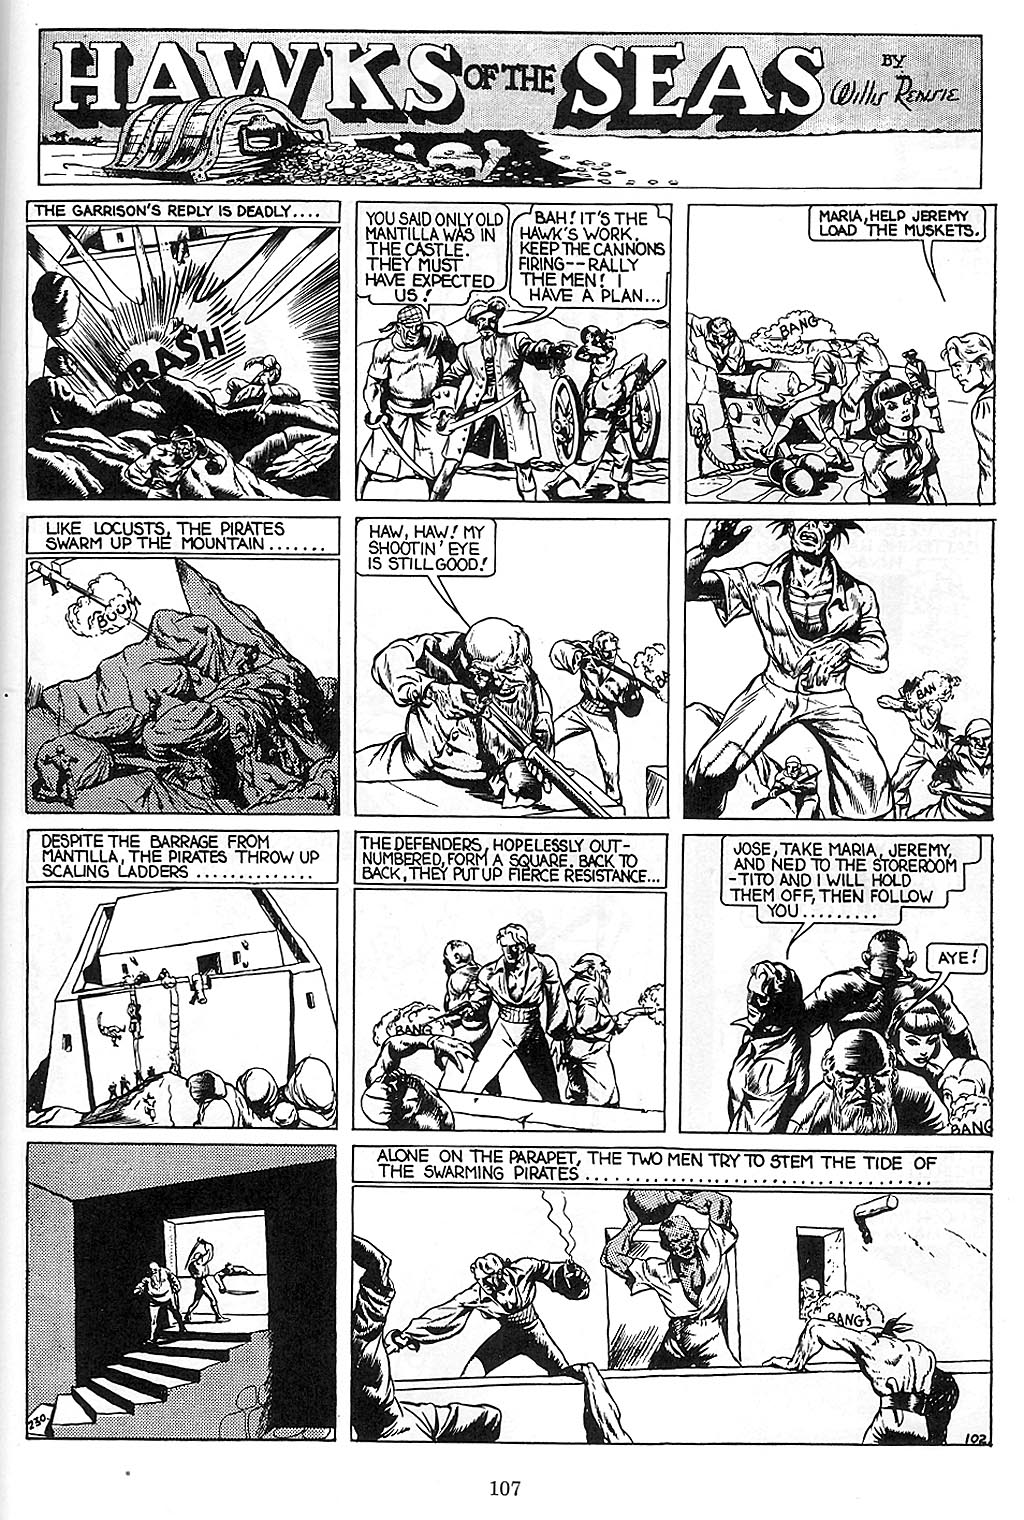 Read online Will Eisner's Hawks of the Seas comic -  Issue # TPB - 108